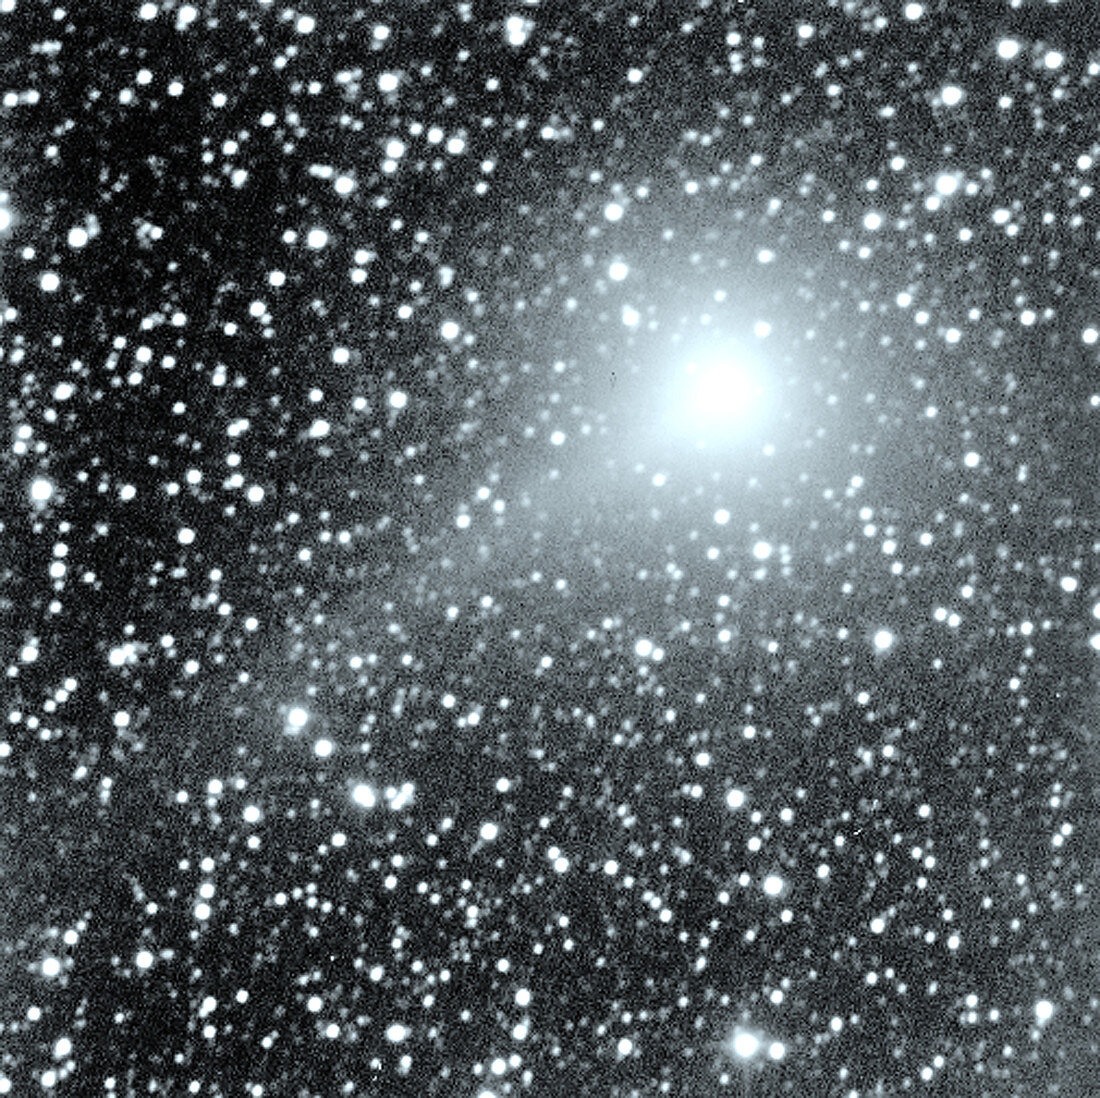 View of comet Williams